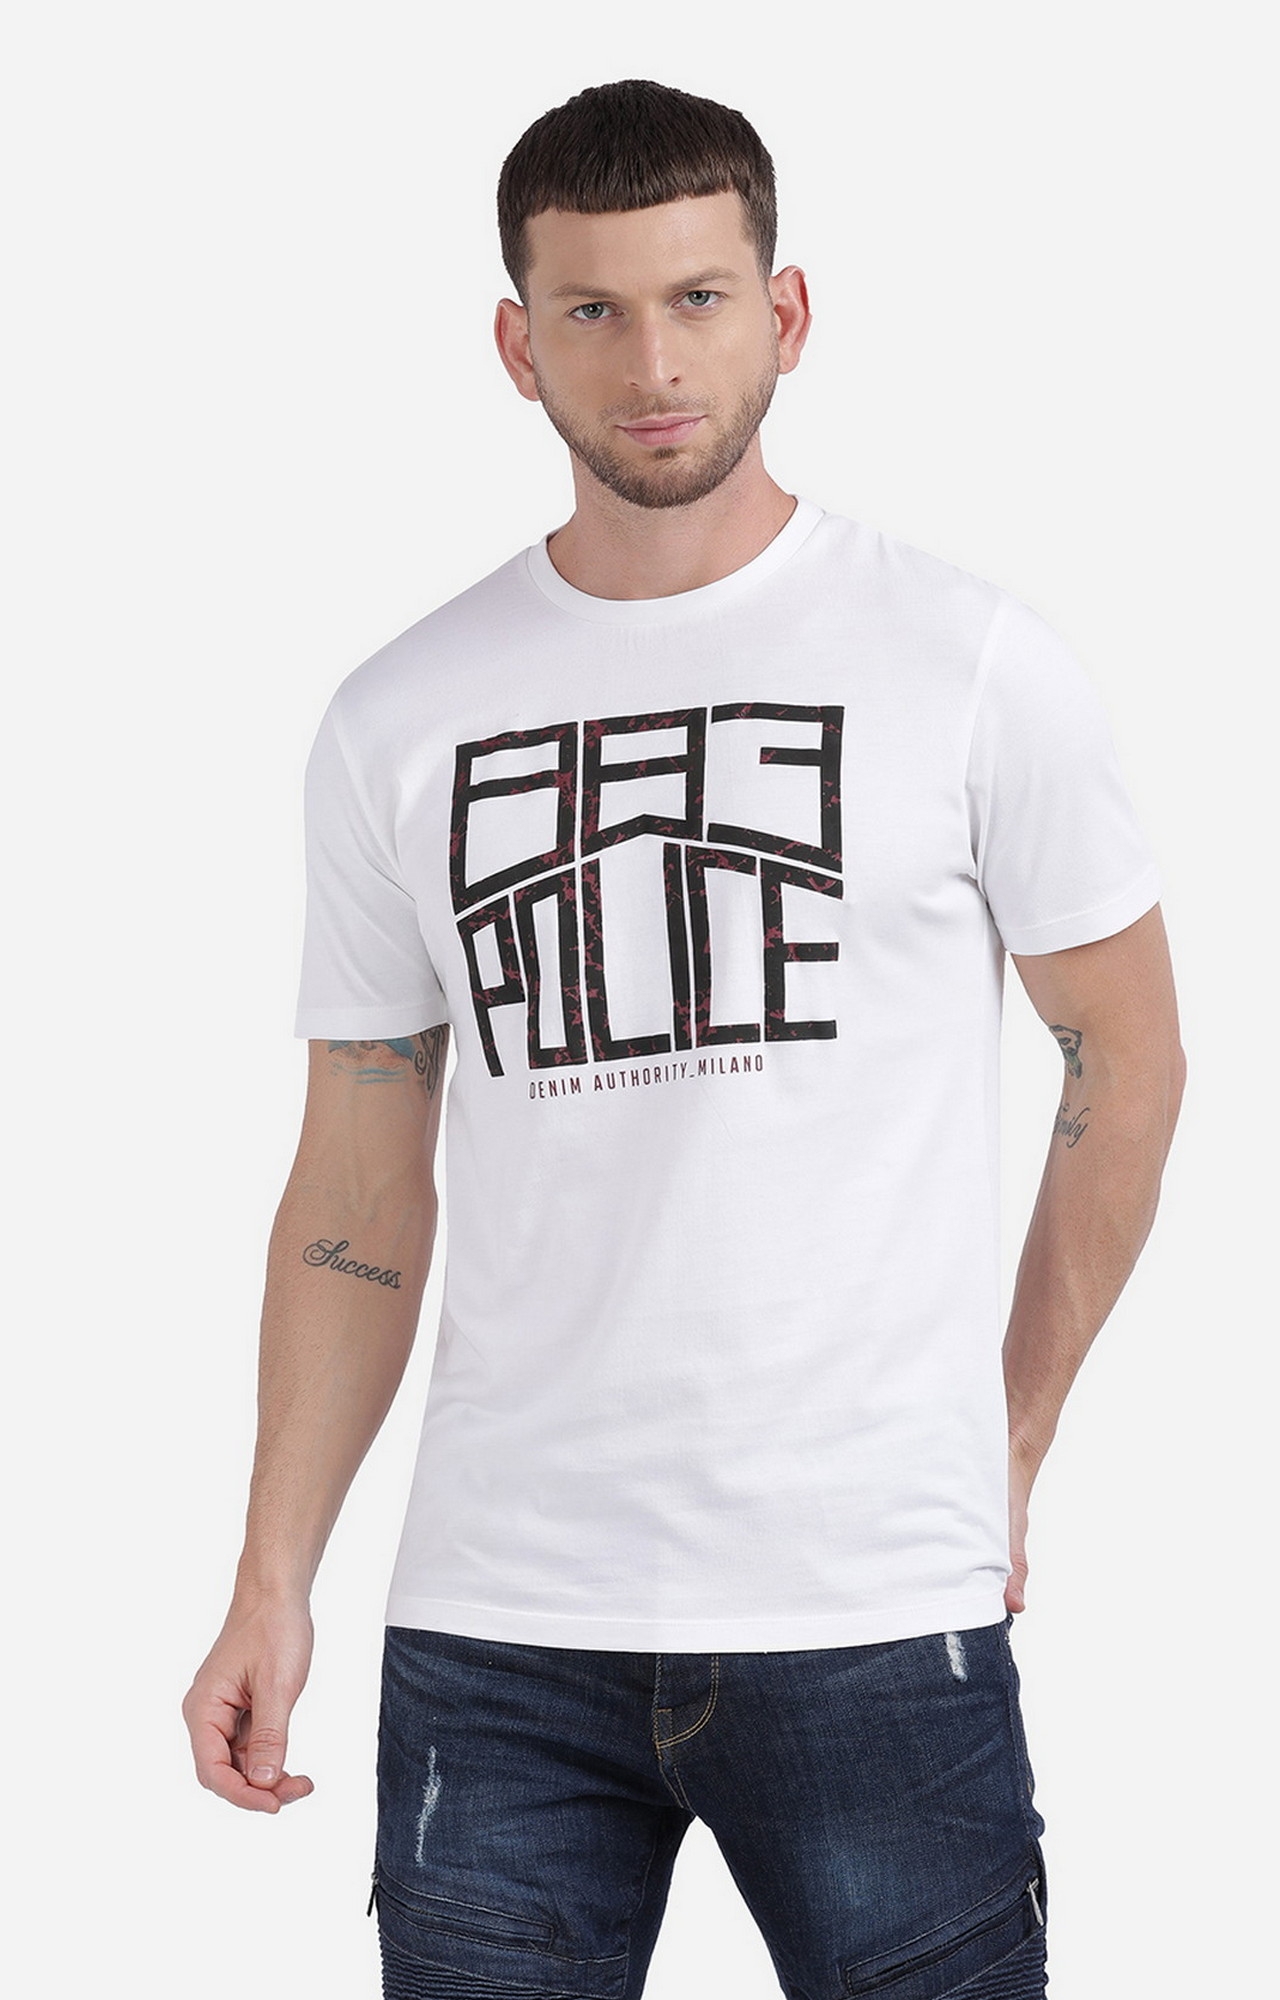 883 Police | Men's White Cotton Typographic Printed T-Shirt 0